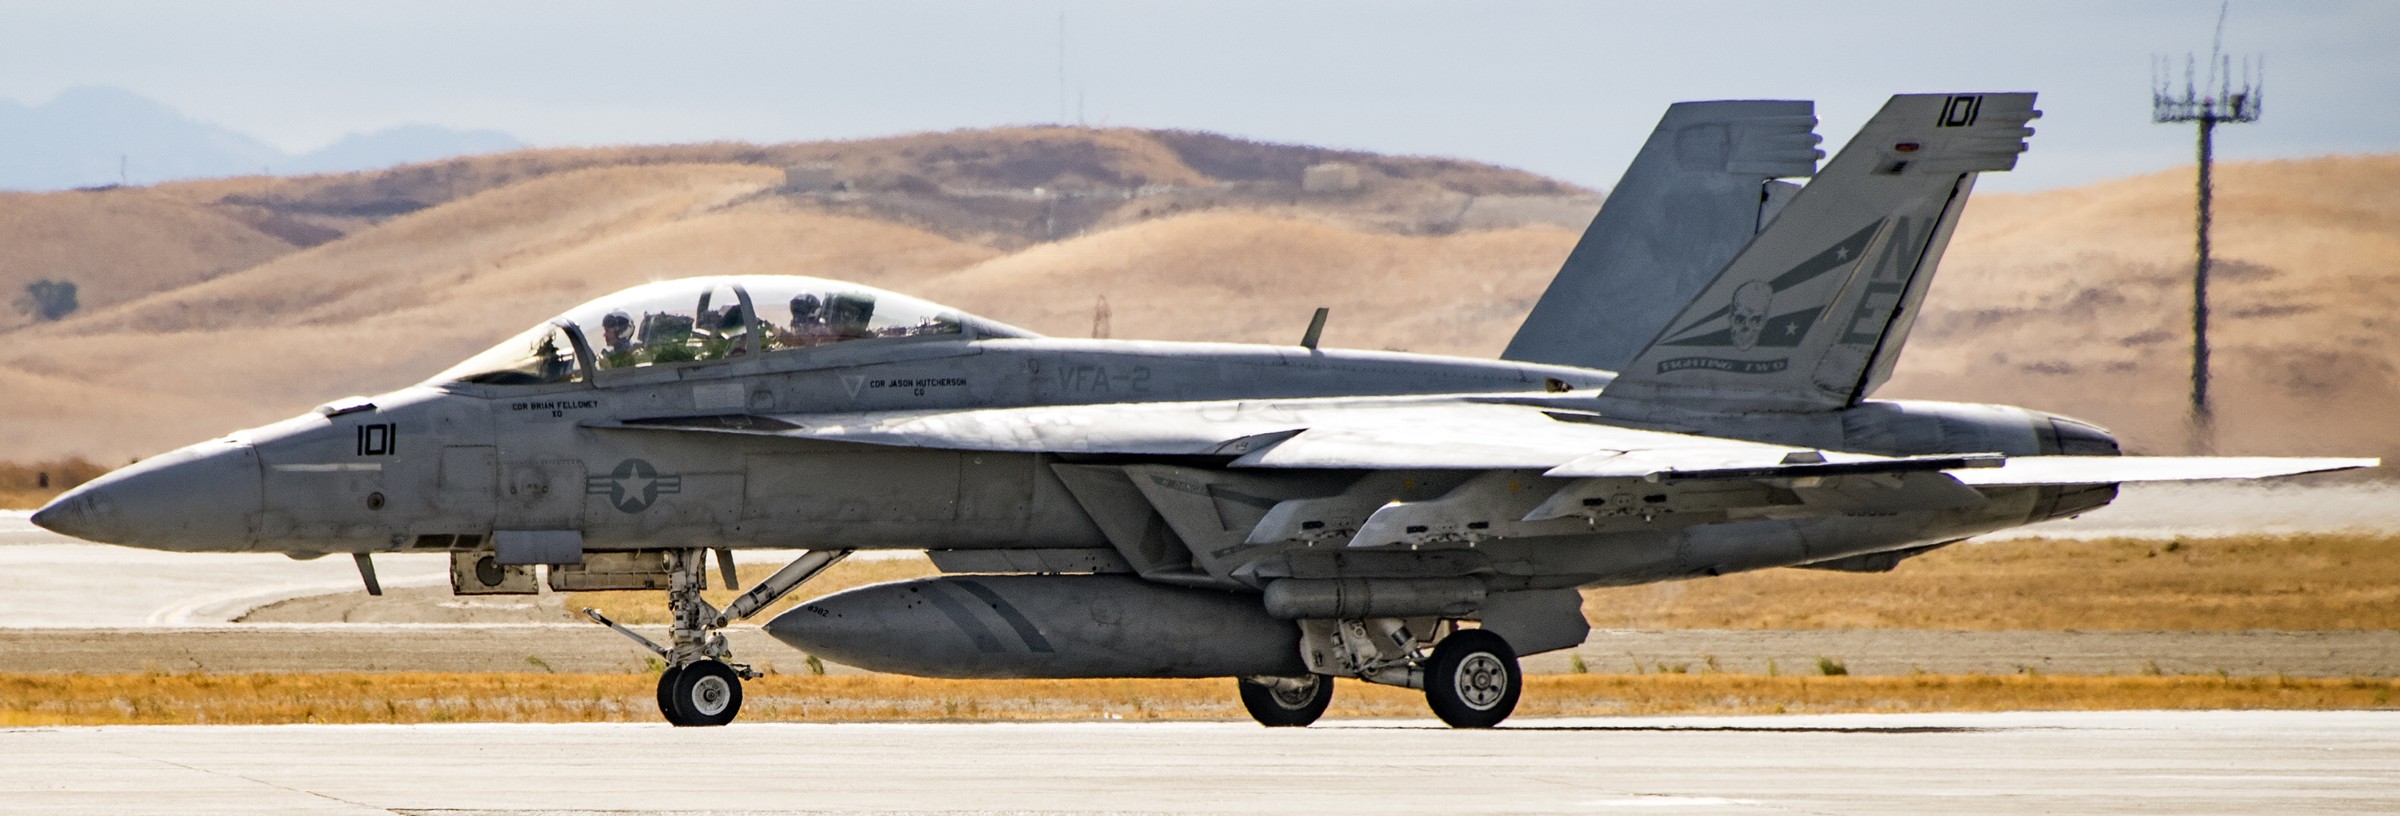 vfa-2 bounty hunters strike fighter squadron us navy f/a-18f super hornet travis afb california 61